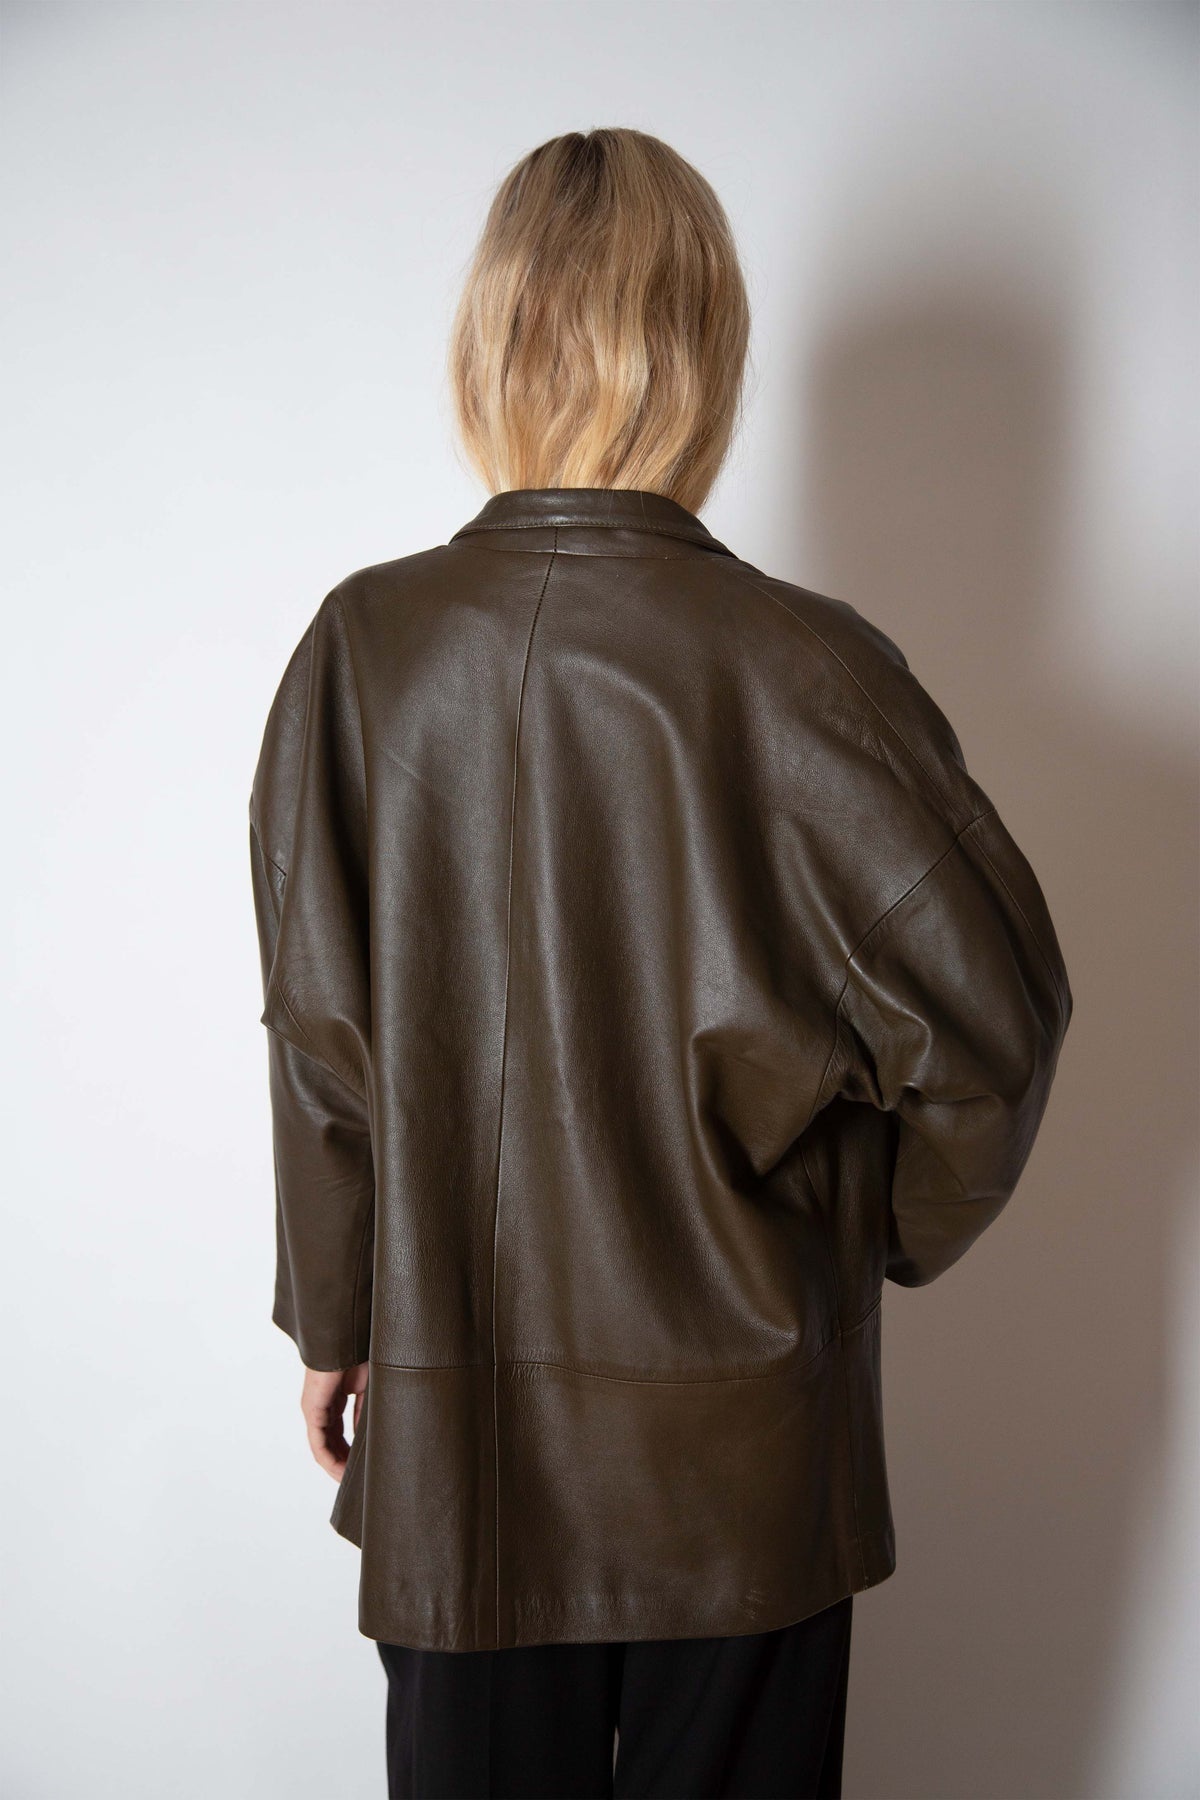 Yves Saint Laurent leather blazer